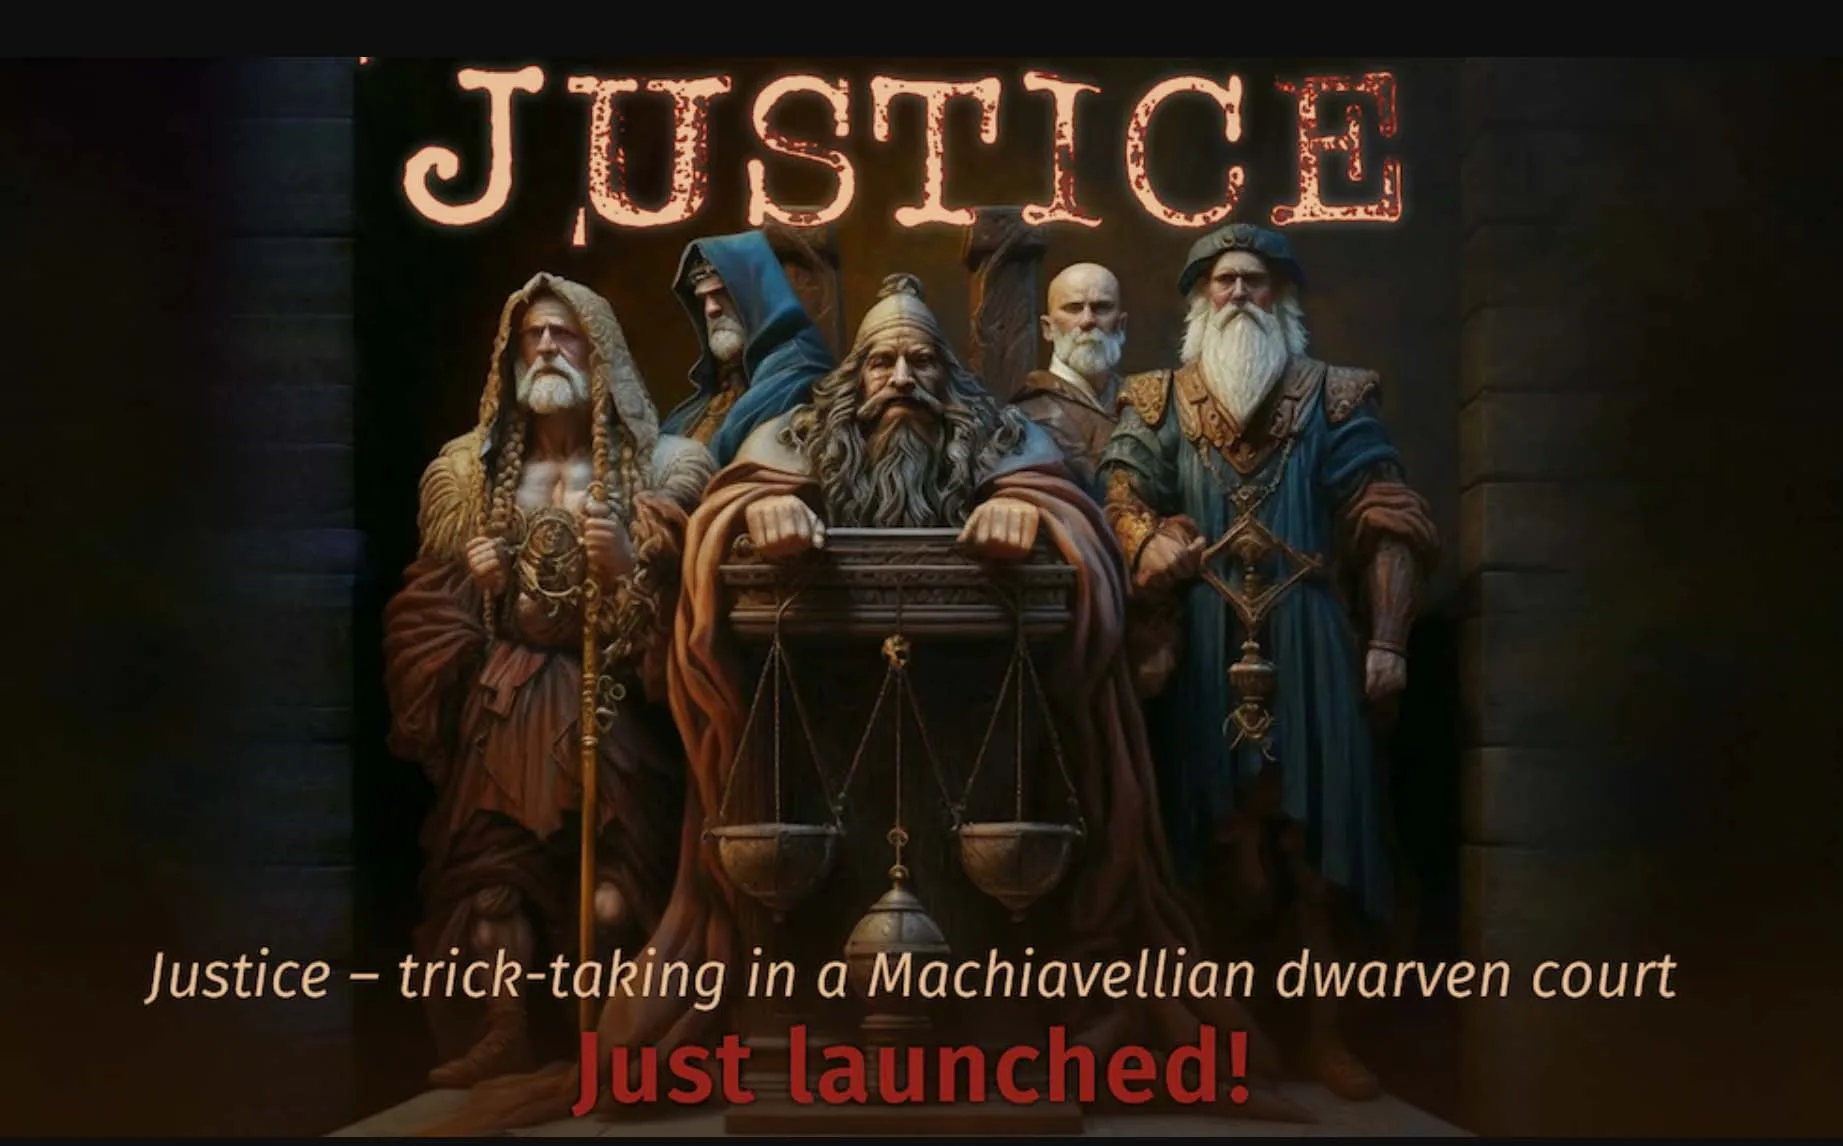 Justice, the dwarven court